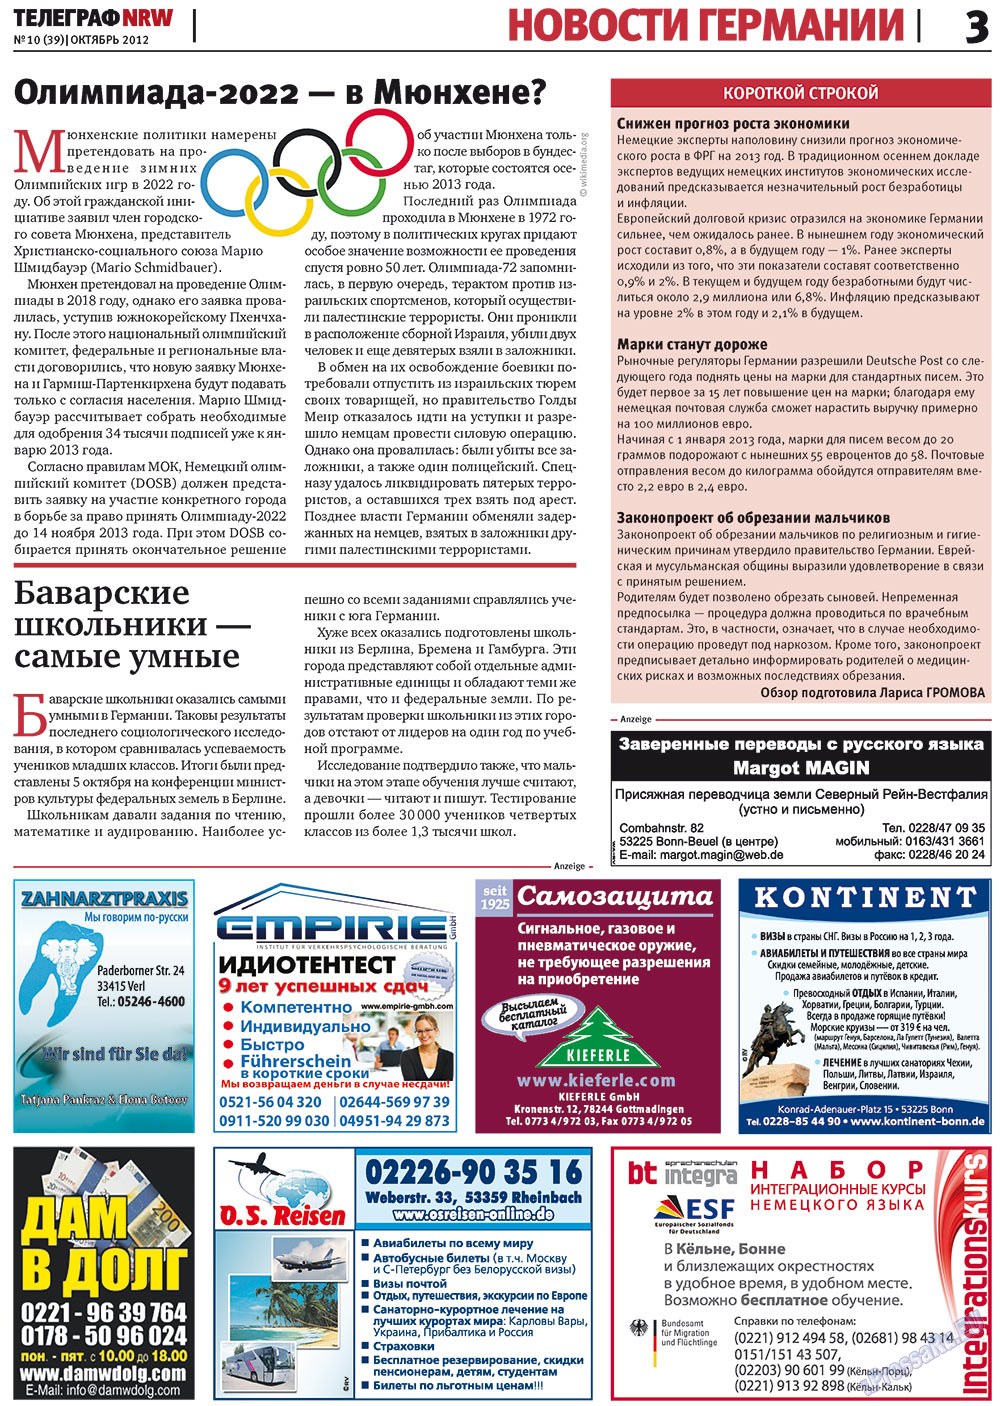 Телеграф NRW, газета. 2012 №10 стр.3